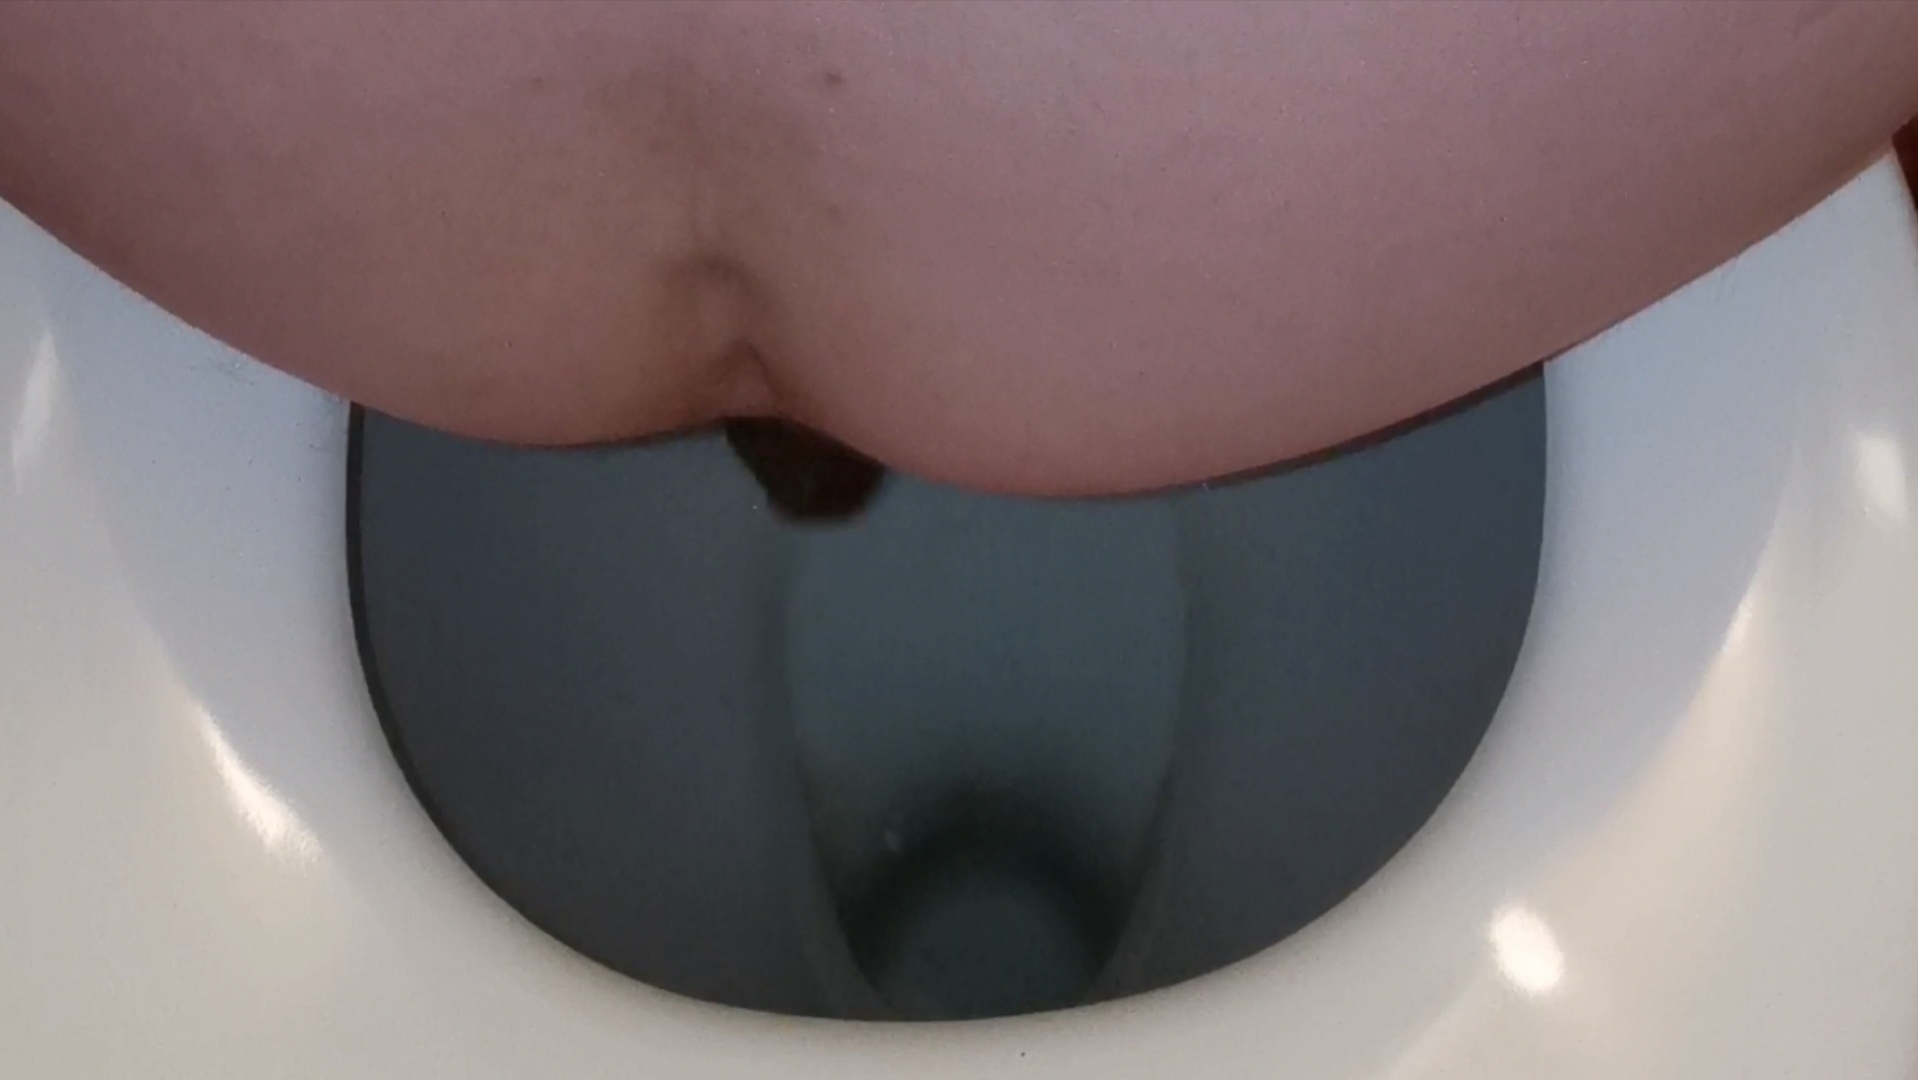 Urgent poop after 2 days without poop